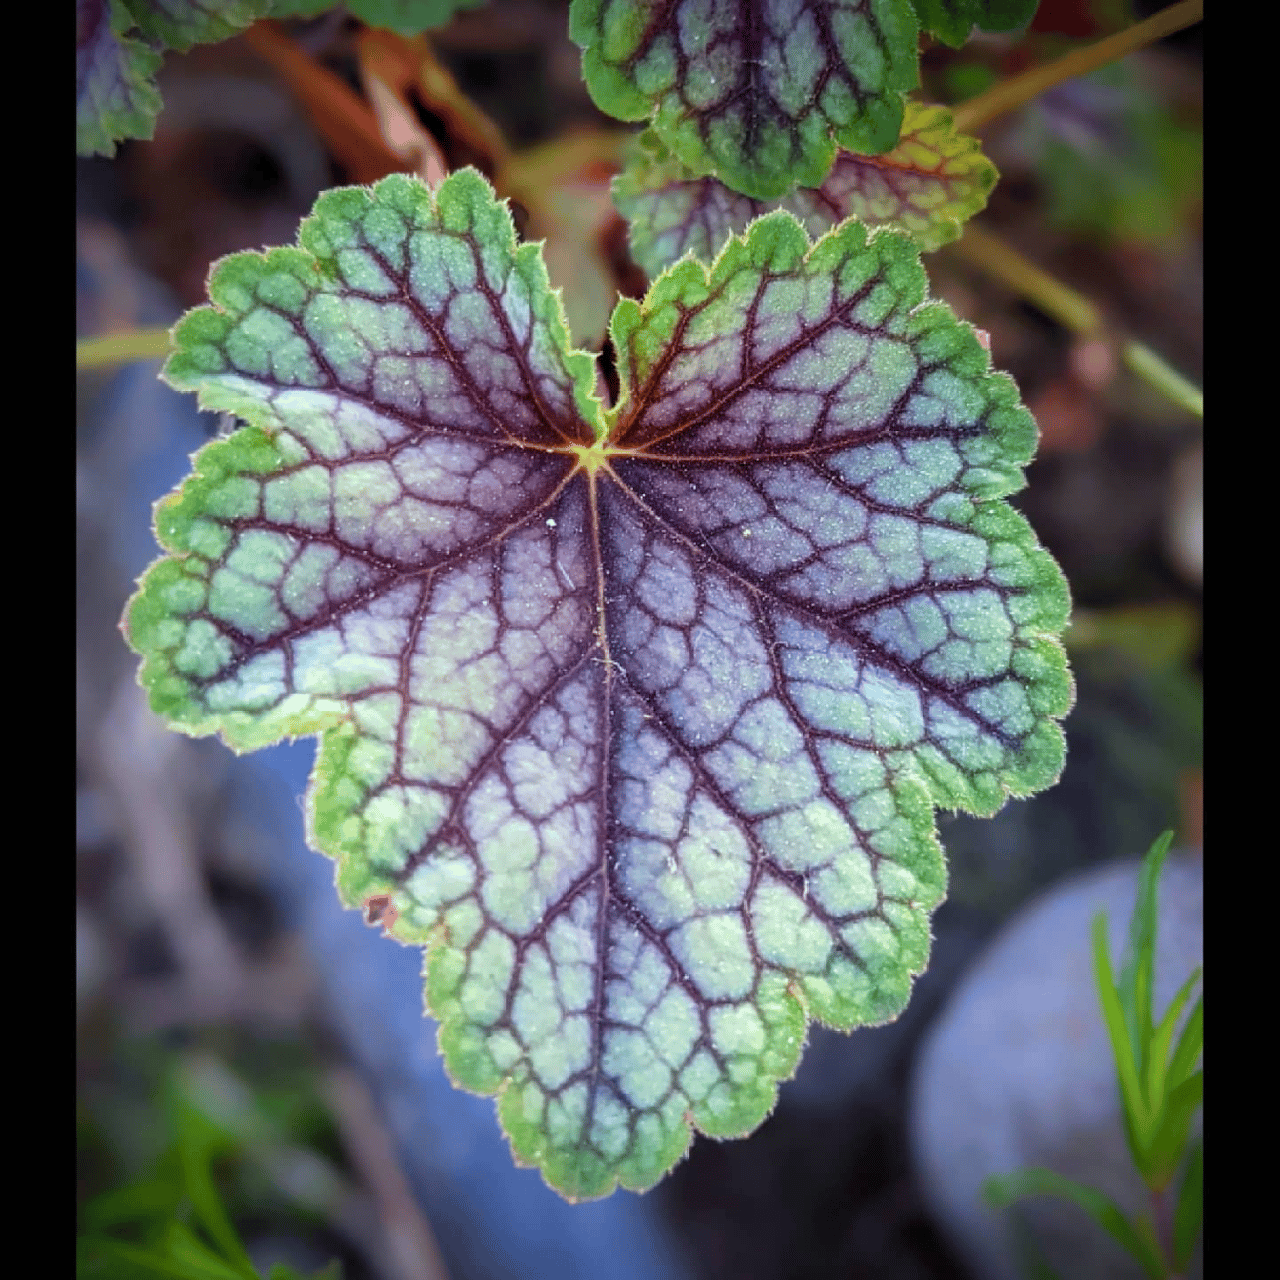 A close-up photo of a multi-colored, fractal leaf.